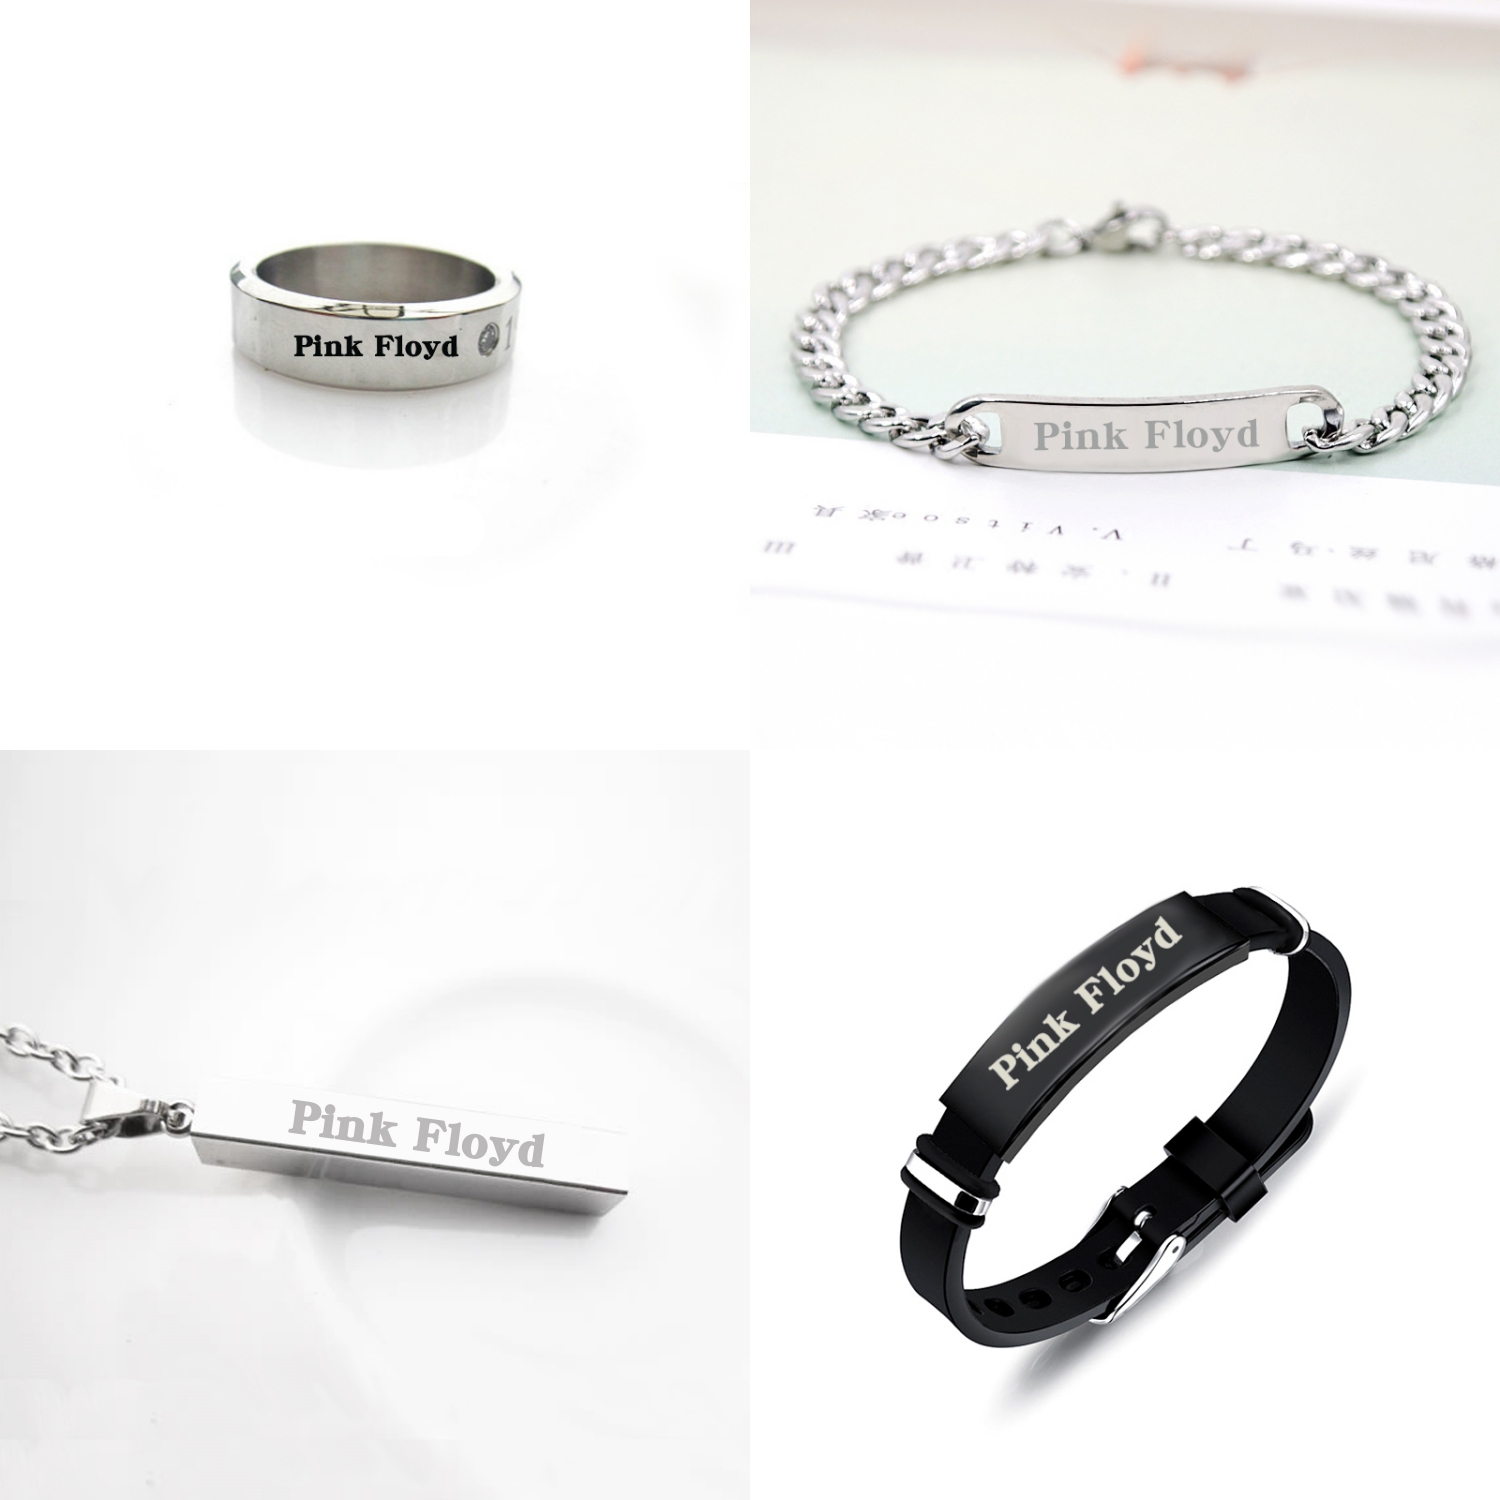 Pink Floyd Titanium Steel Ring Necklace Bracelet Peripheral Gifts